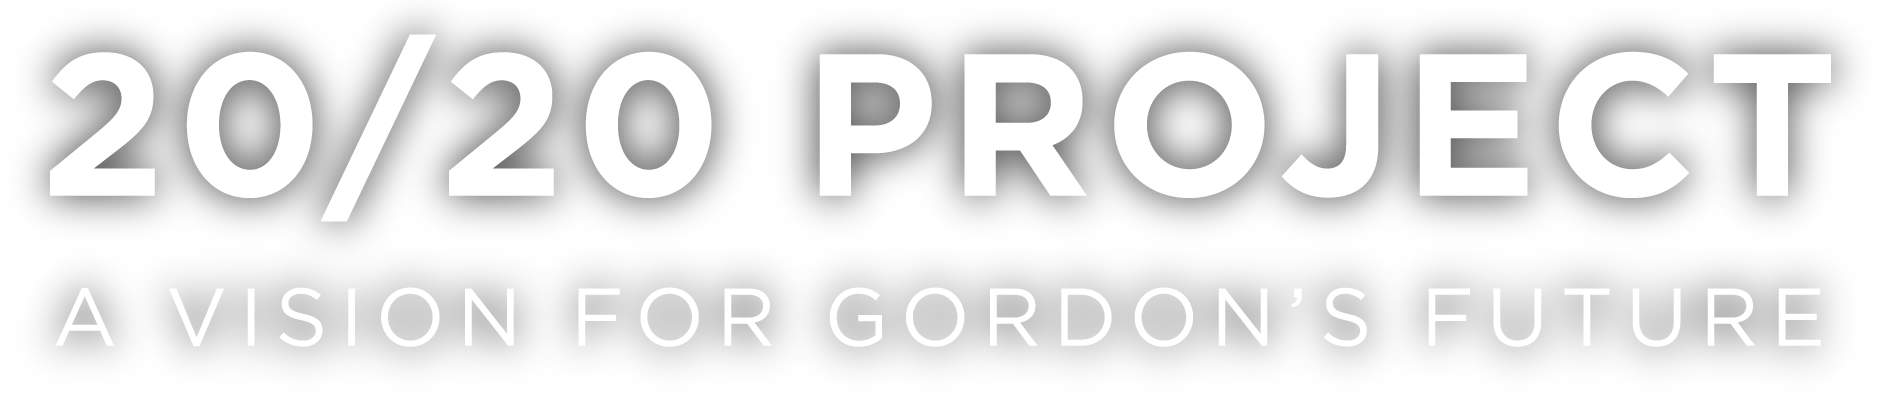 20/20 Project: A Vision for Gordon's Future